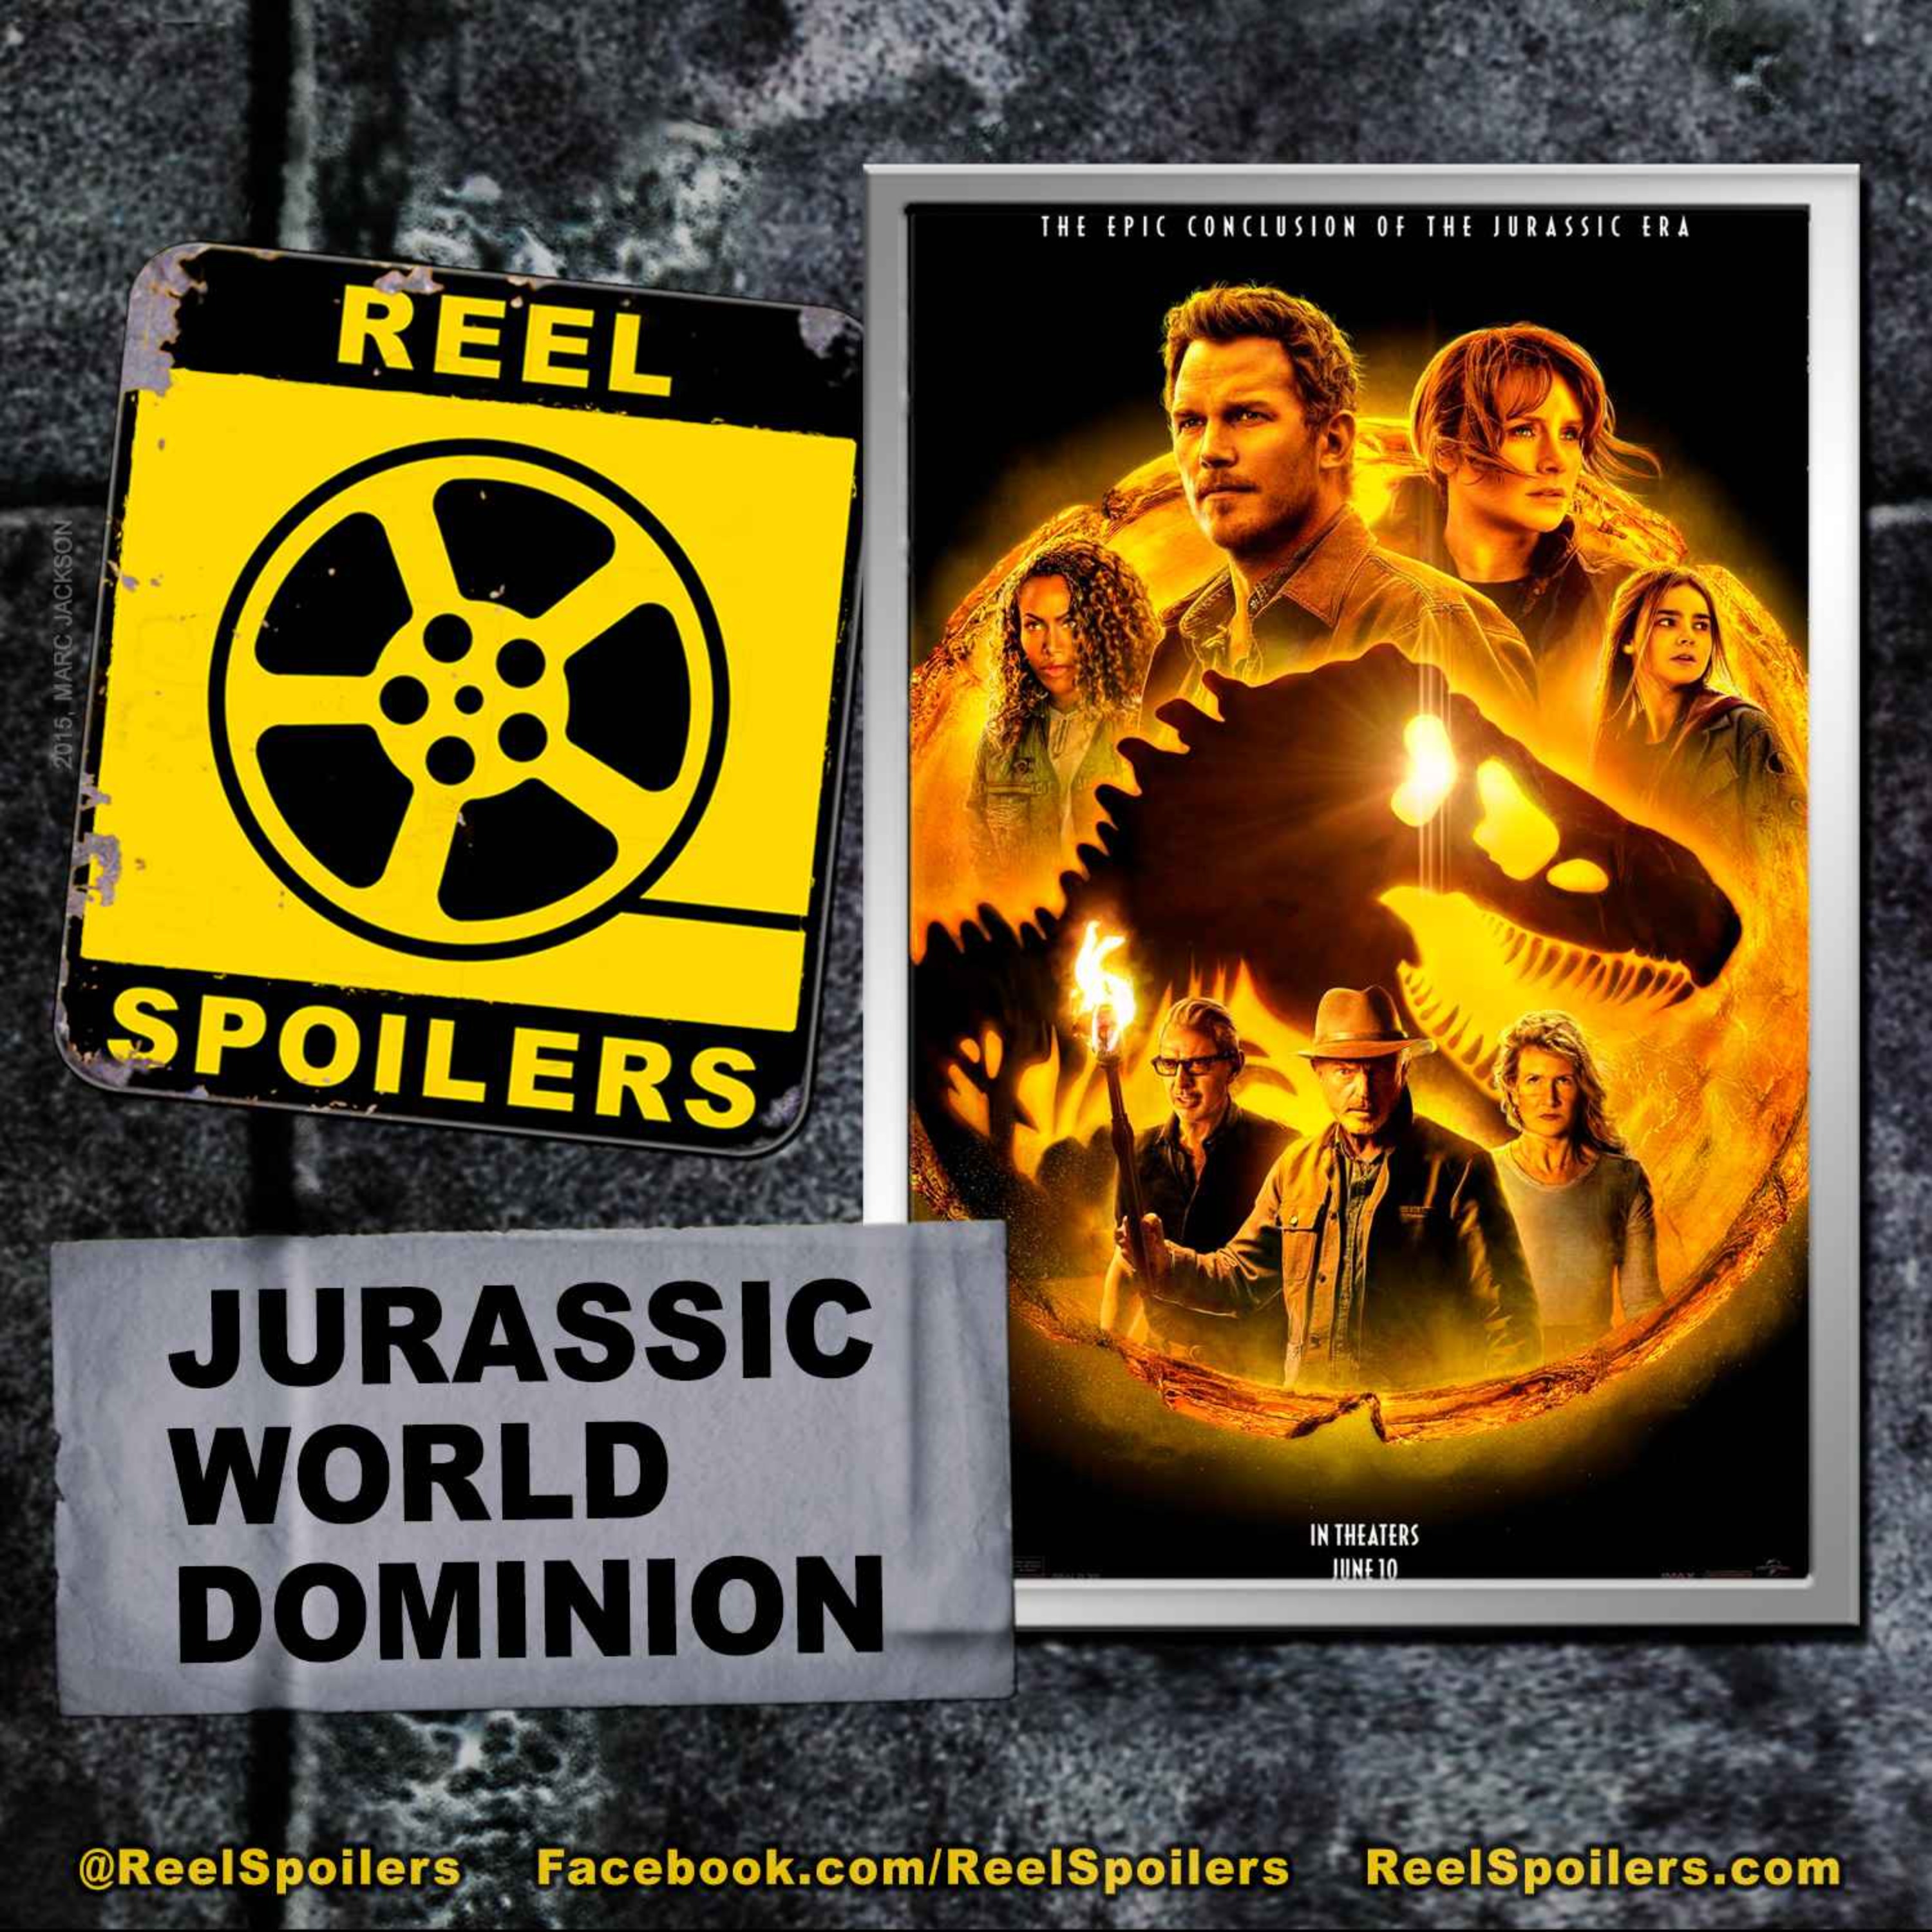 JURASSIC WORLD DOMINION Starring Chris Pratt, Bryce Dallas Howard, Jeff Goldblum Image